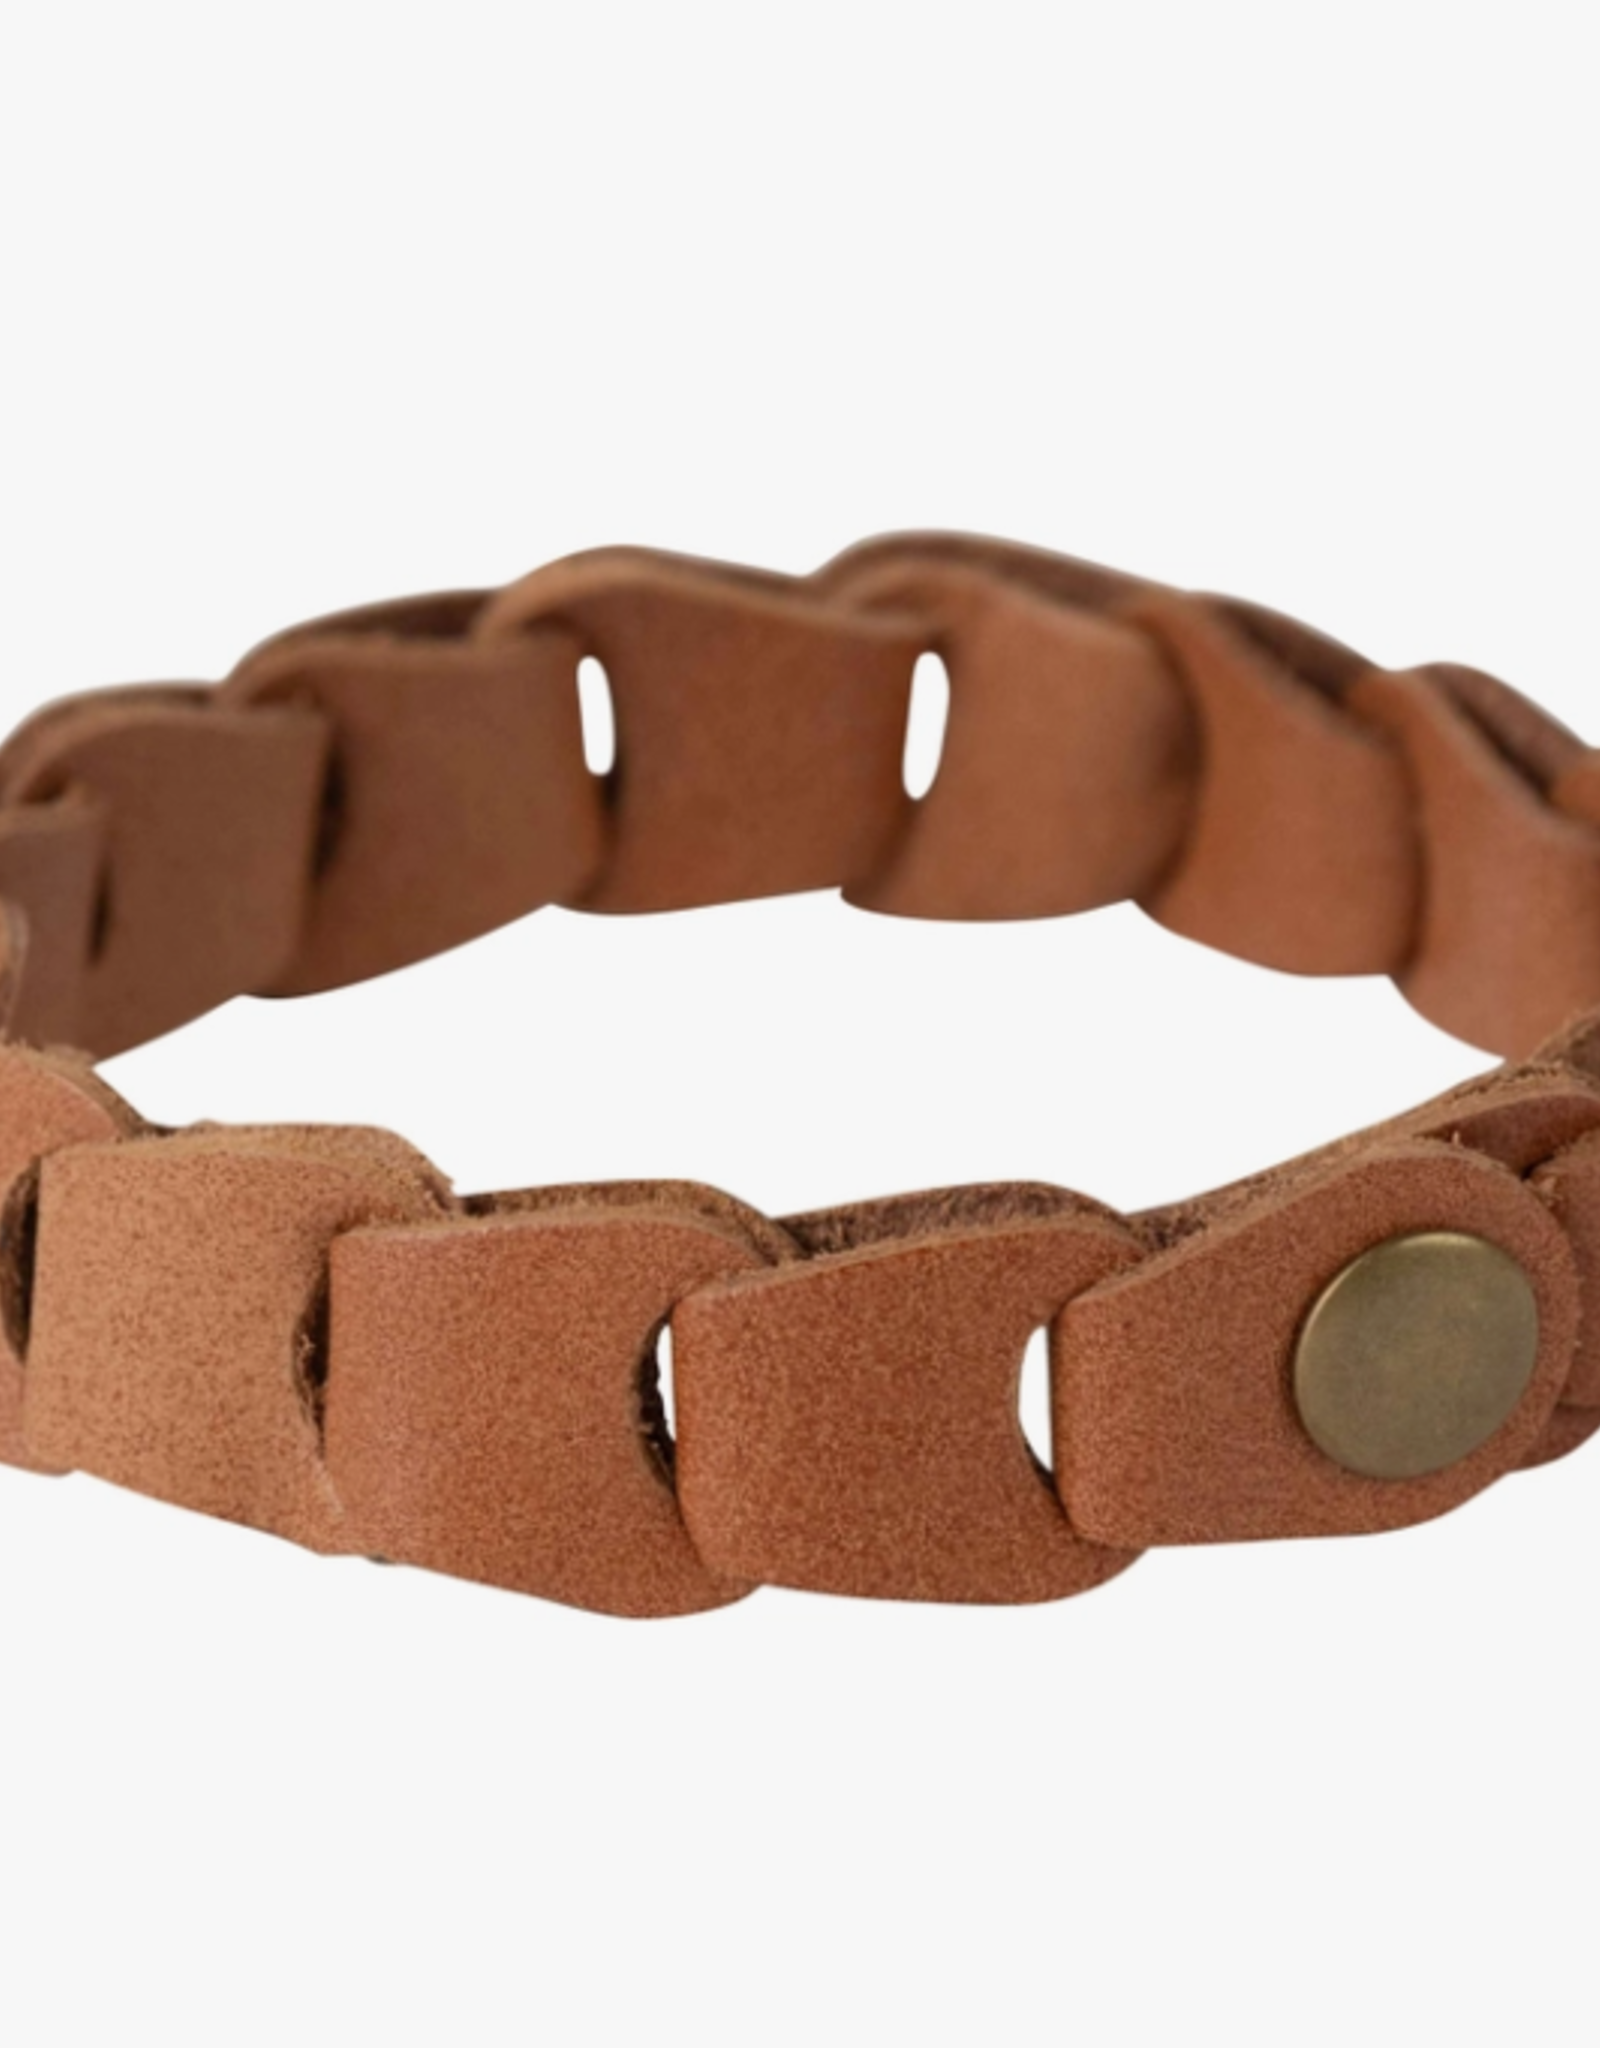 Ten Thousand Villages Buffalo Leather Cuff Bracelet